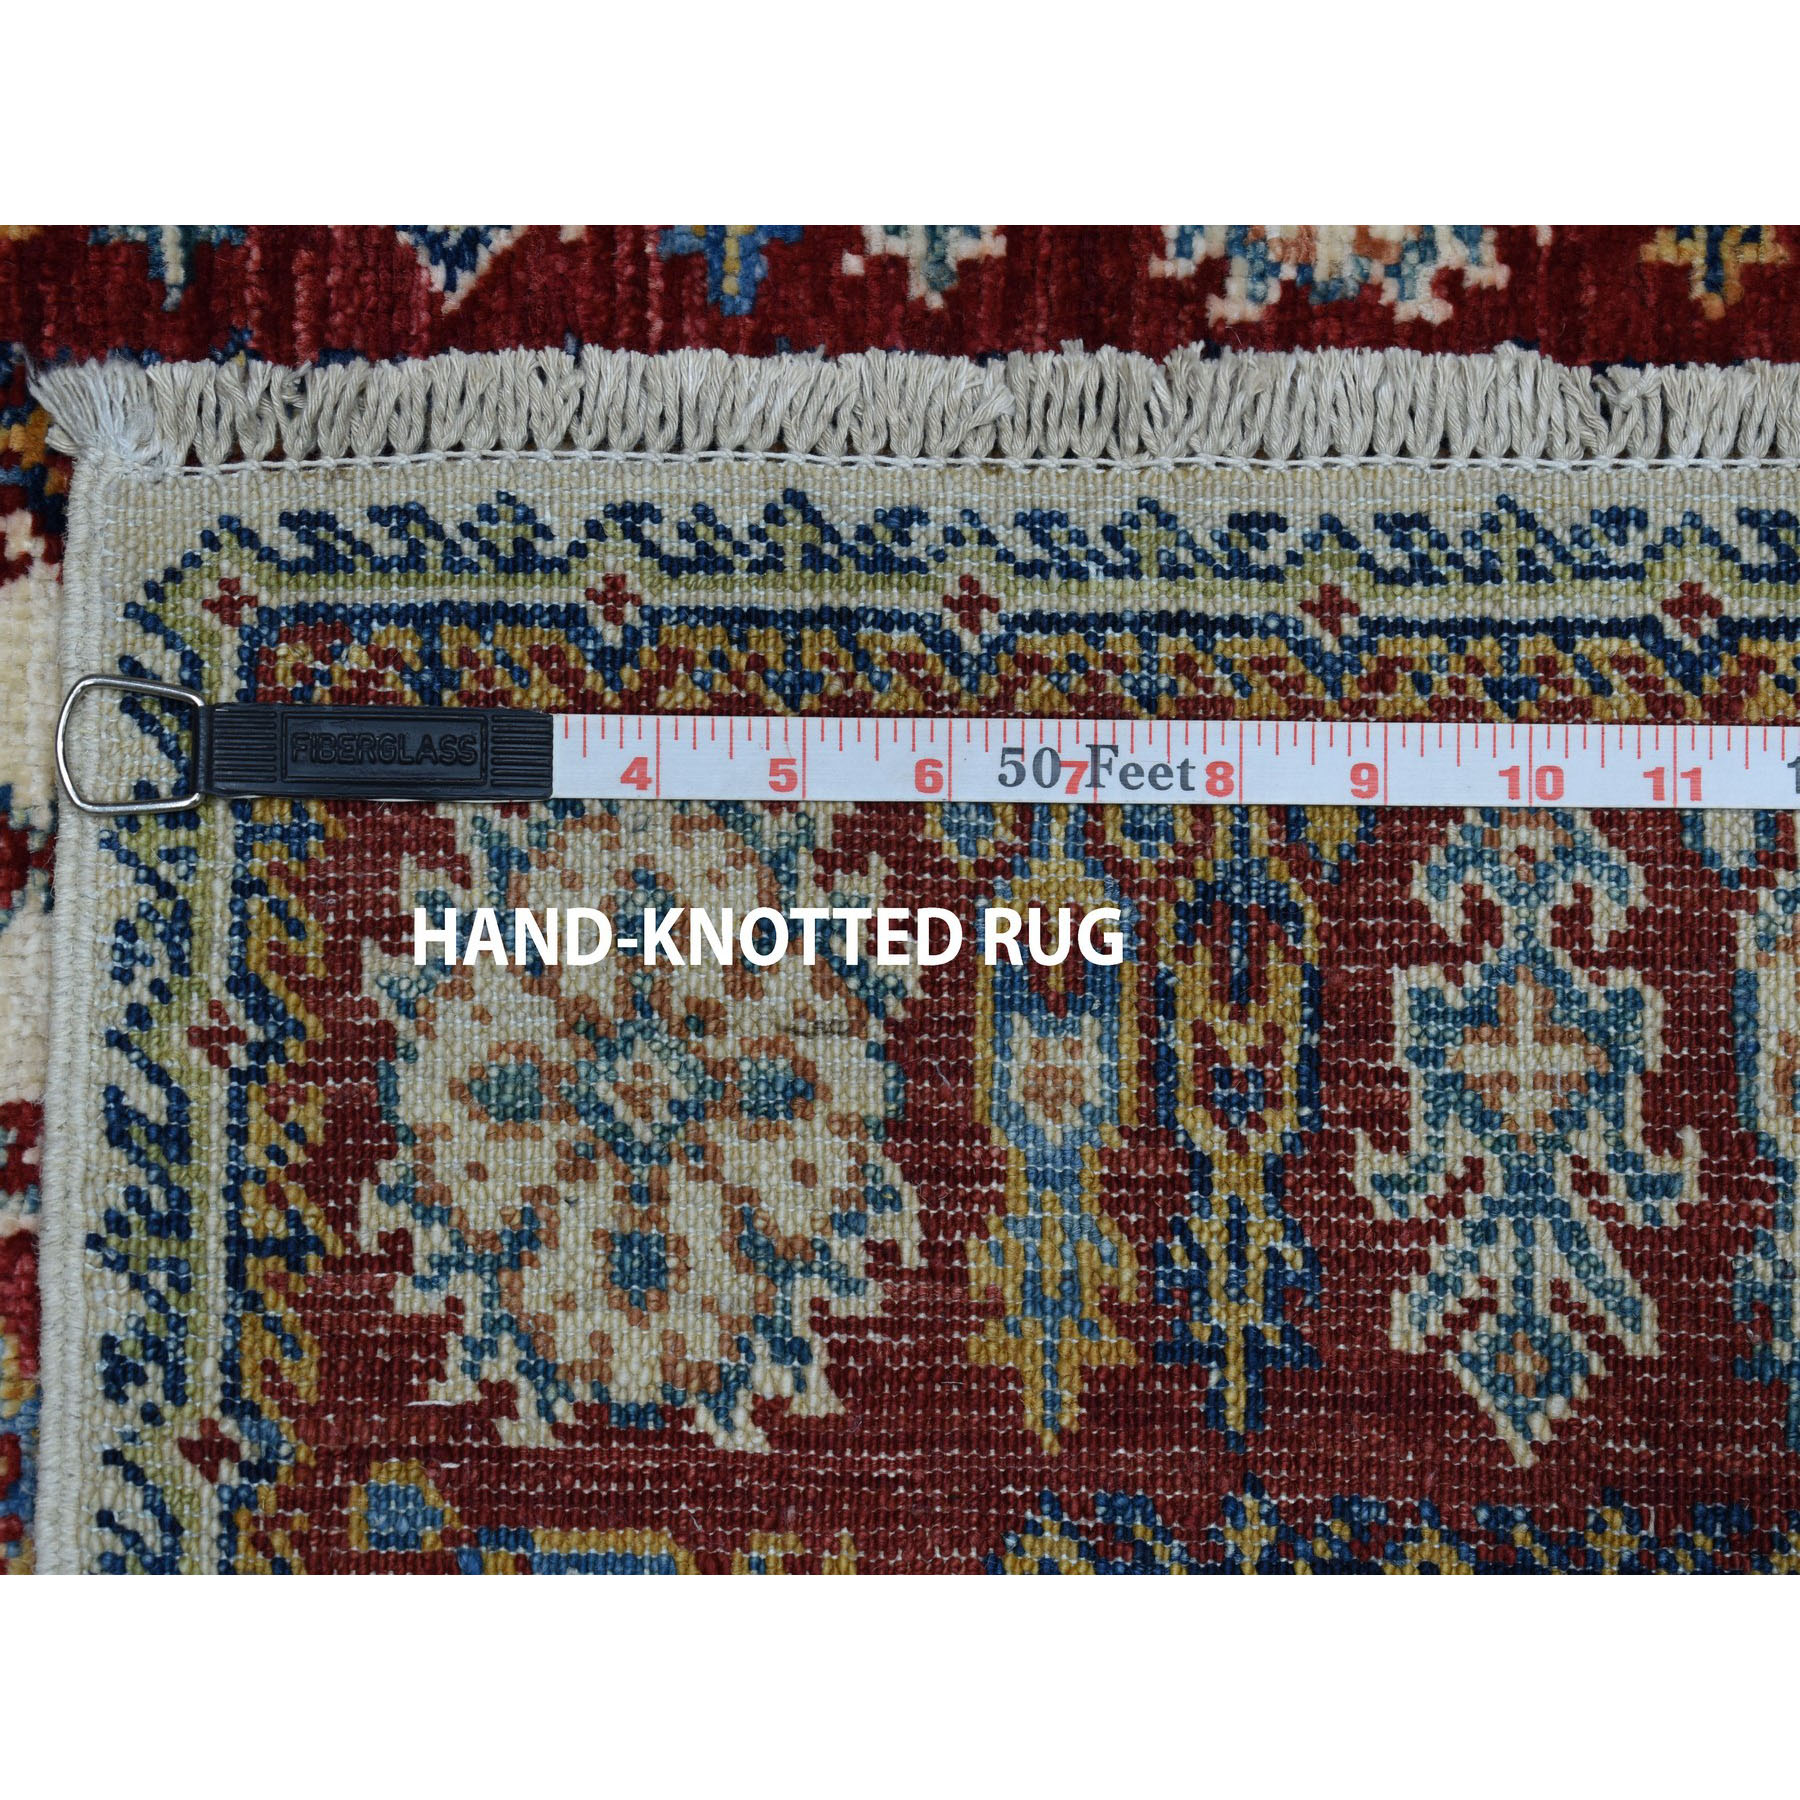 2'8"x4'7" Ivory Super Kazak Pure Wool Geometric Design Hand Woven Oriental Rug 